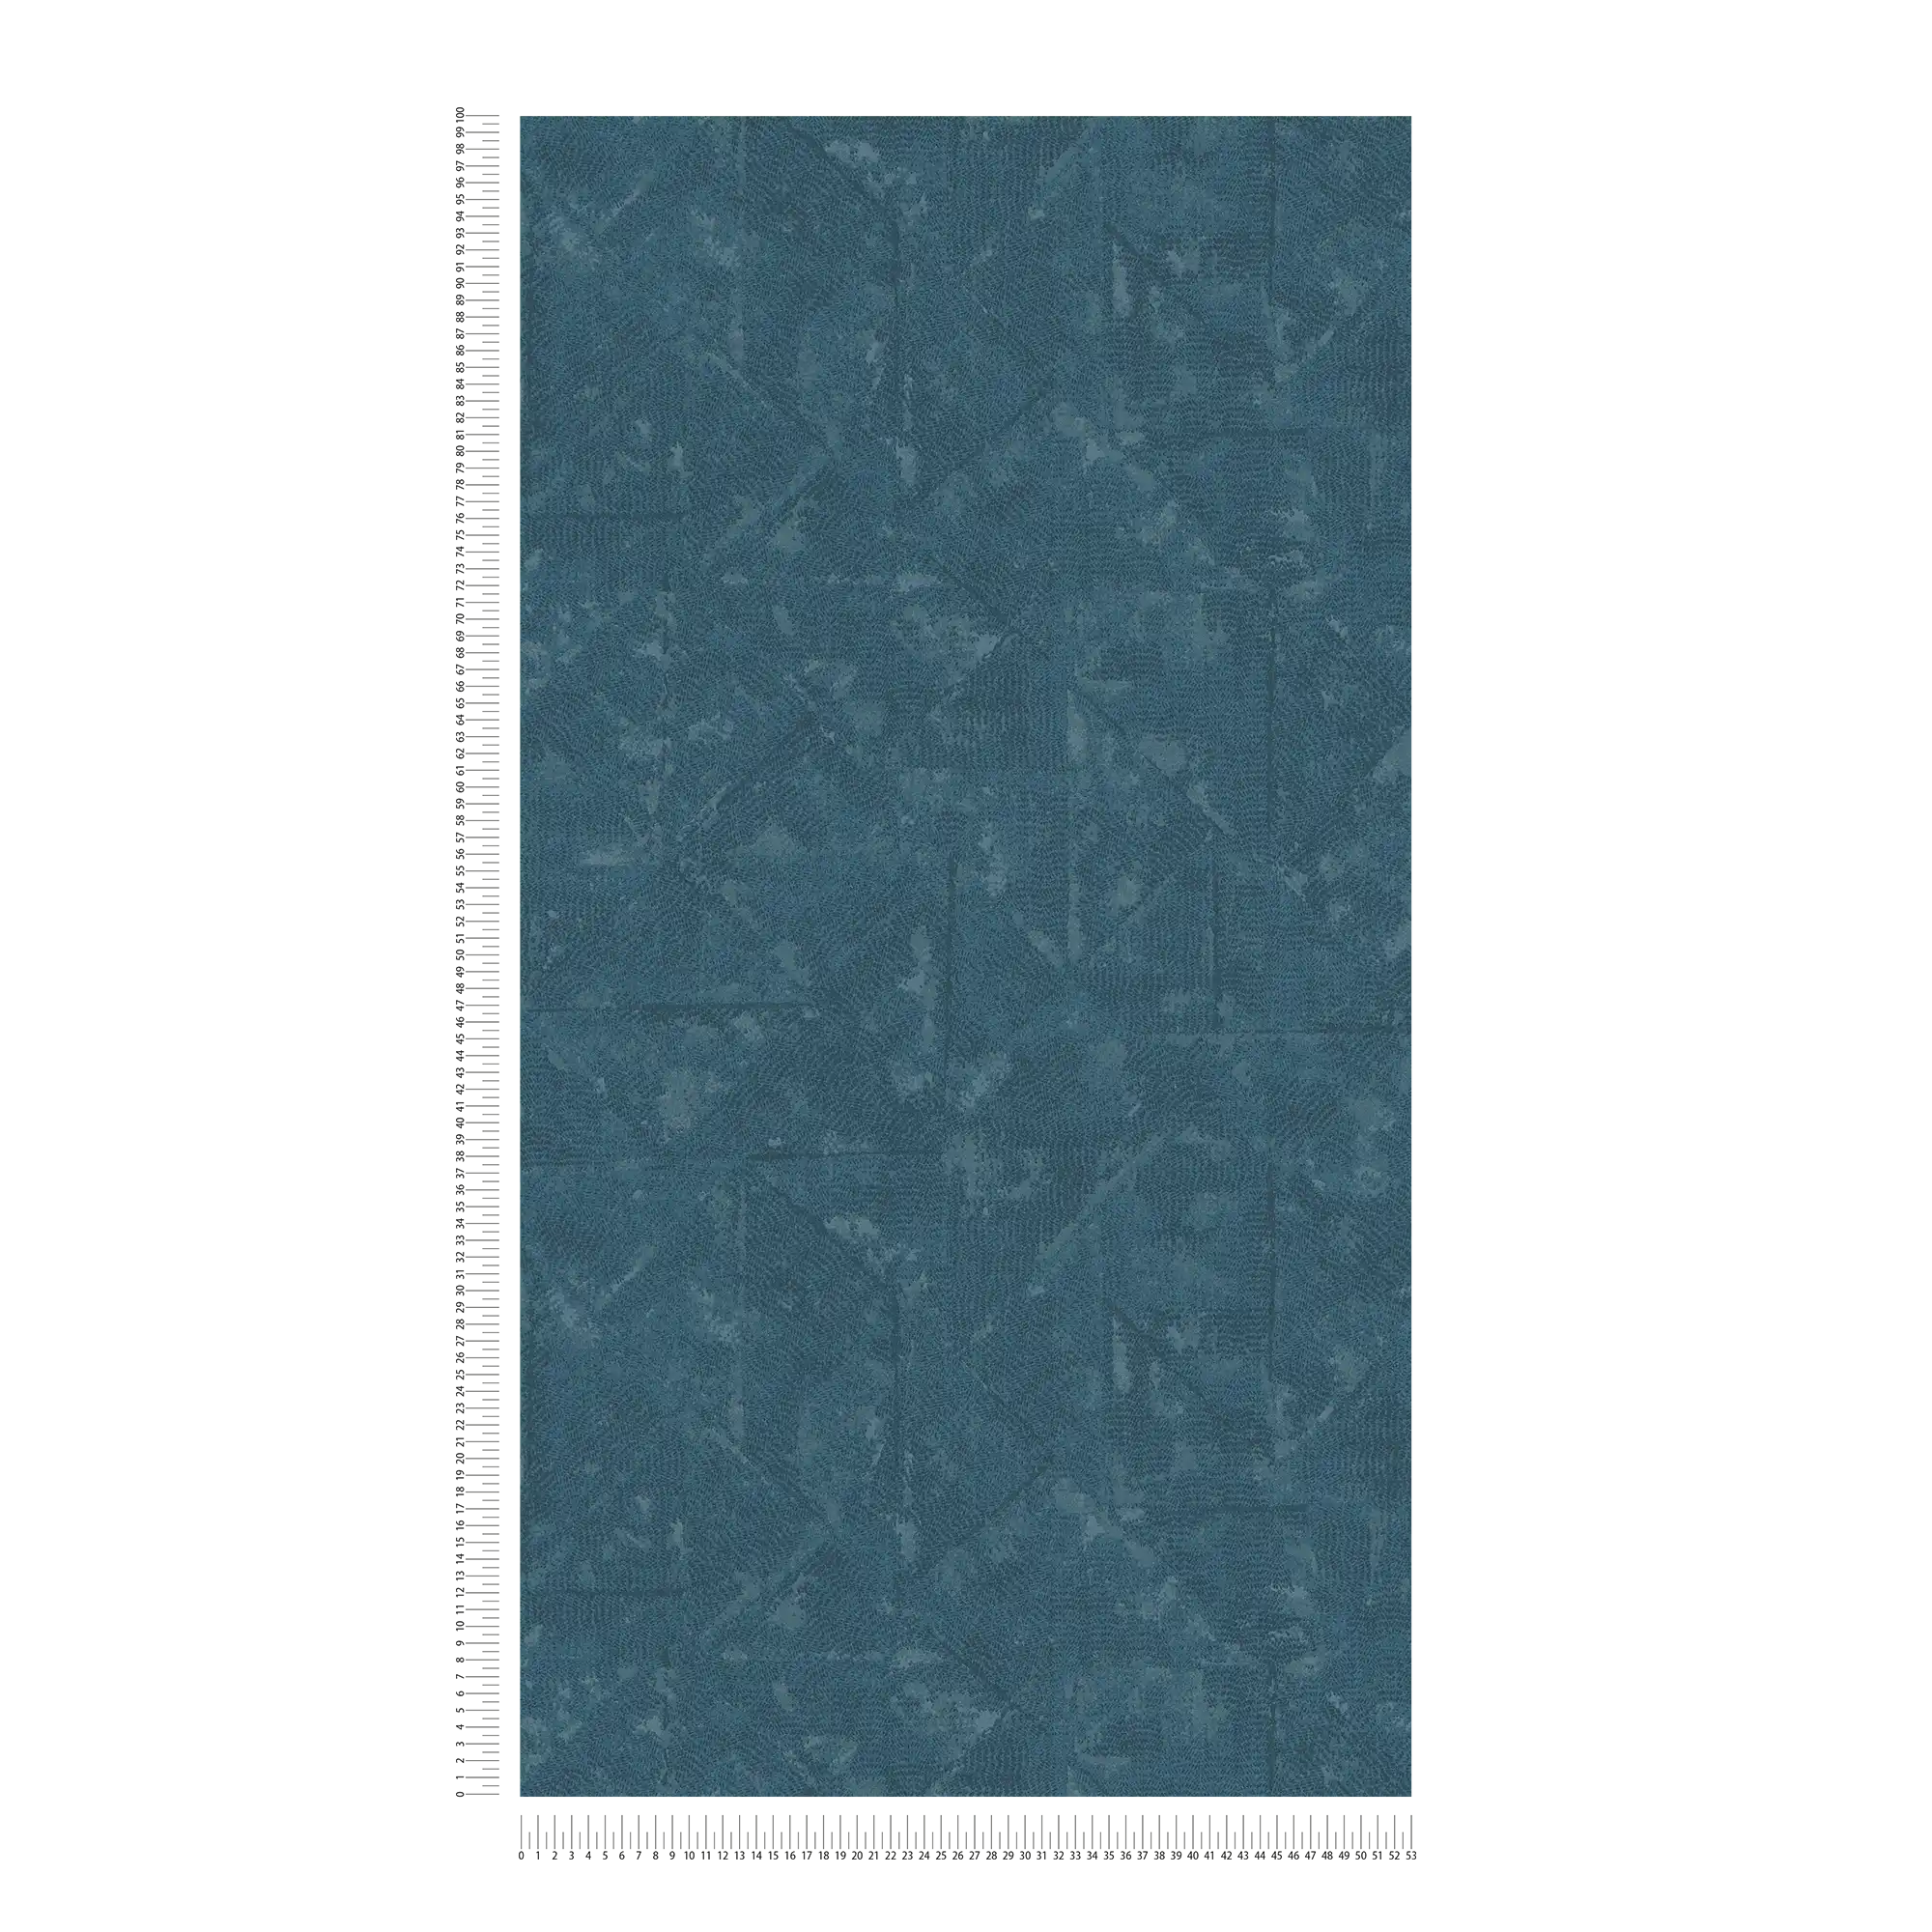             Petrolfarbene Vliestapete asymmetrische Details – Blau, Grau
        